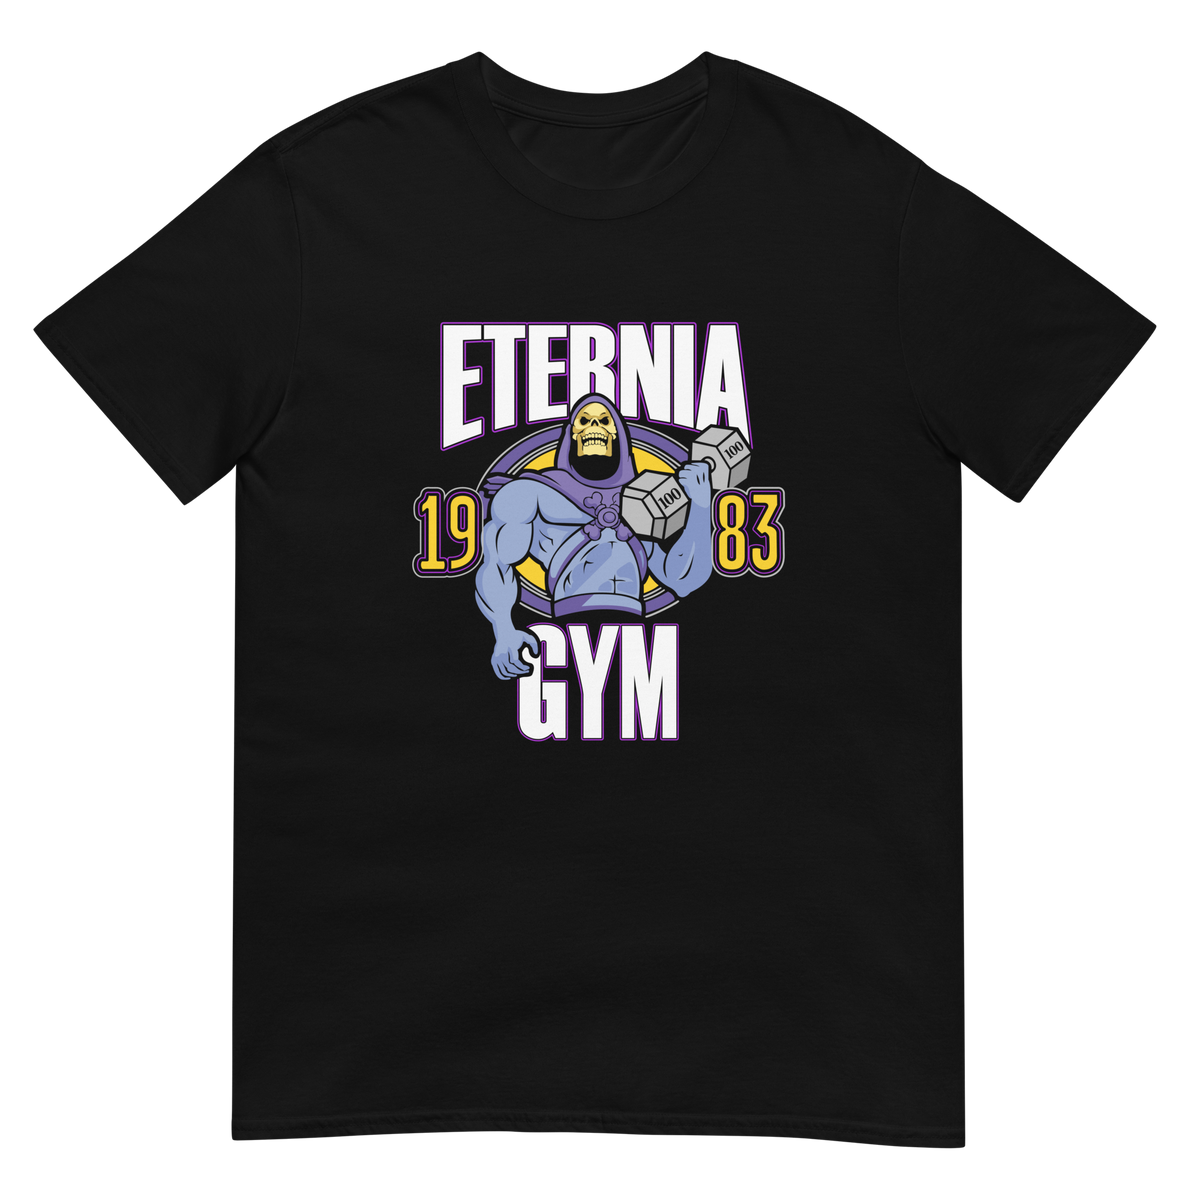 Nome do produto: Camiseta  Eternia Gym 1983